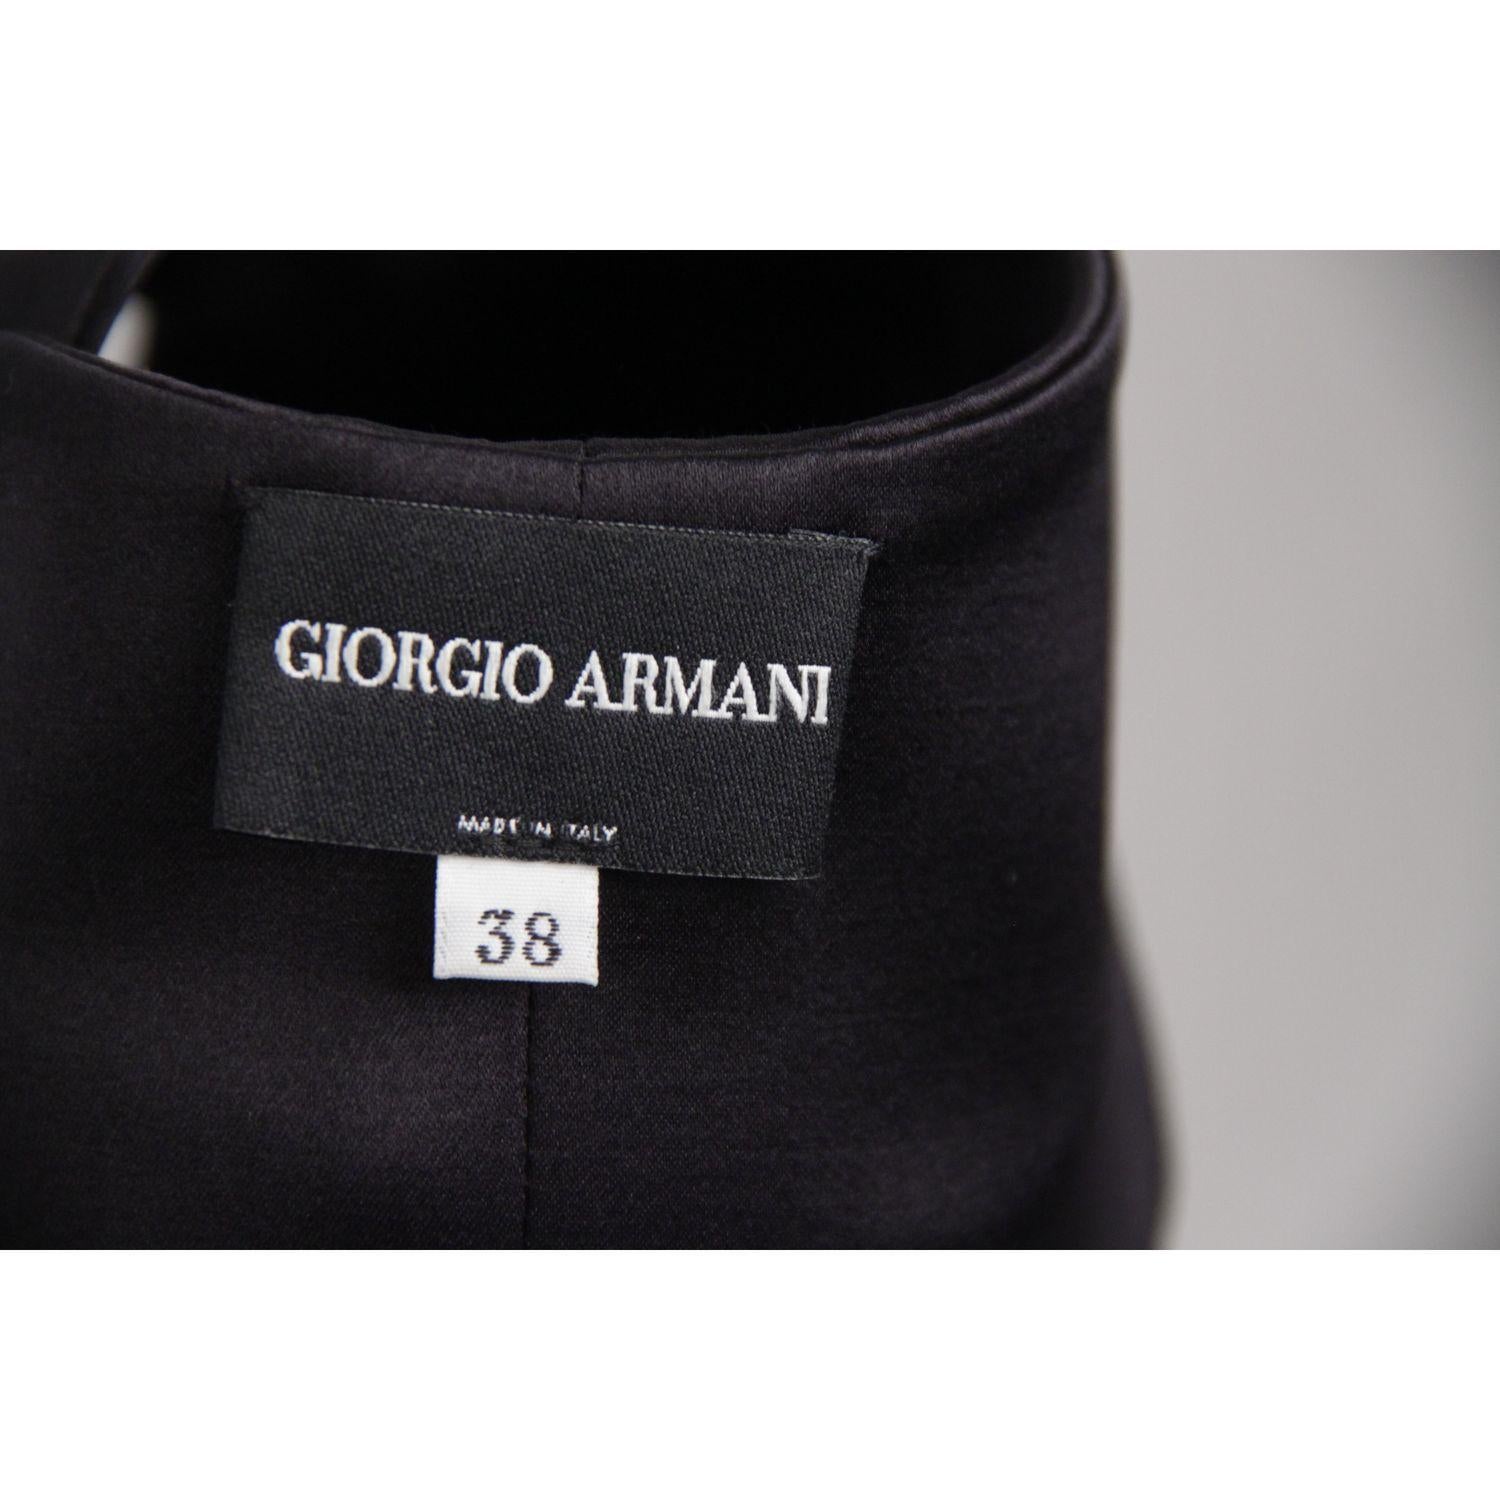 Armani Sleeveless Top Cropped Size 38 2